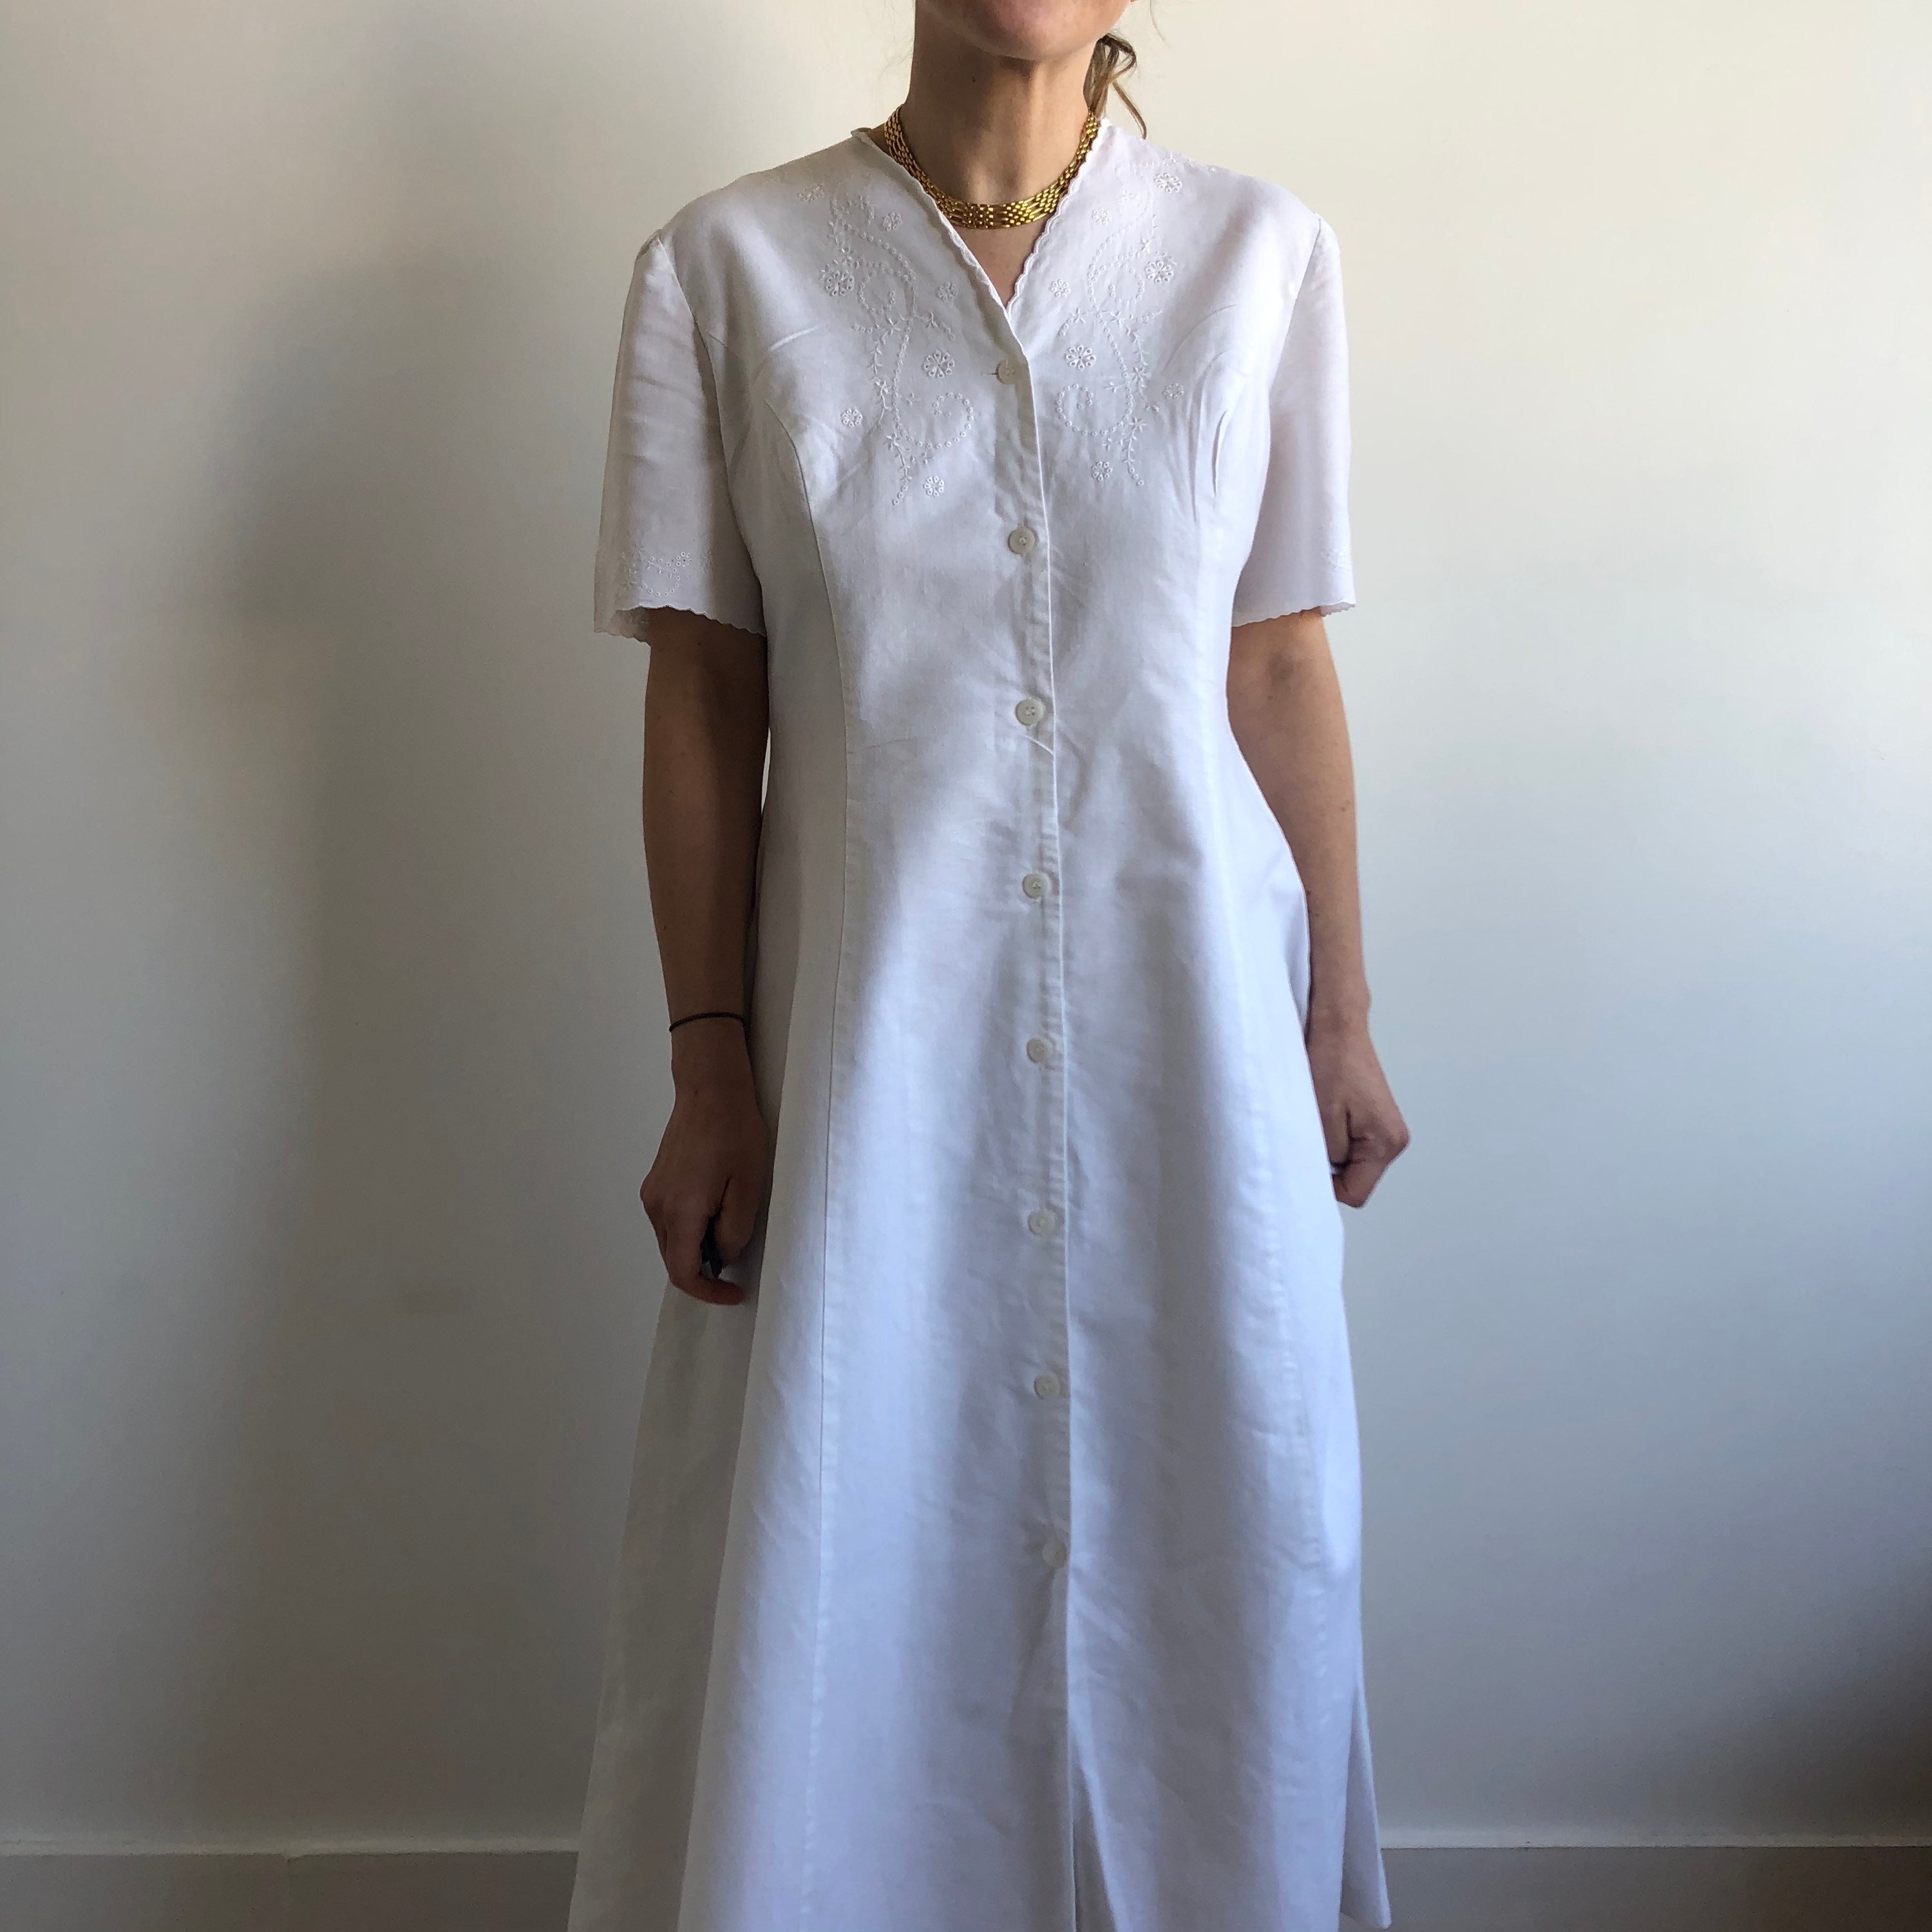 Vintage Laura Ashley cotton / linen dress. Originally womens | Etsy